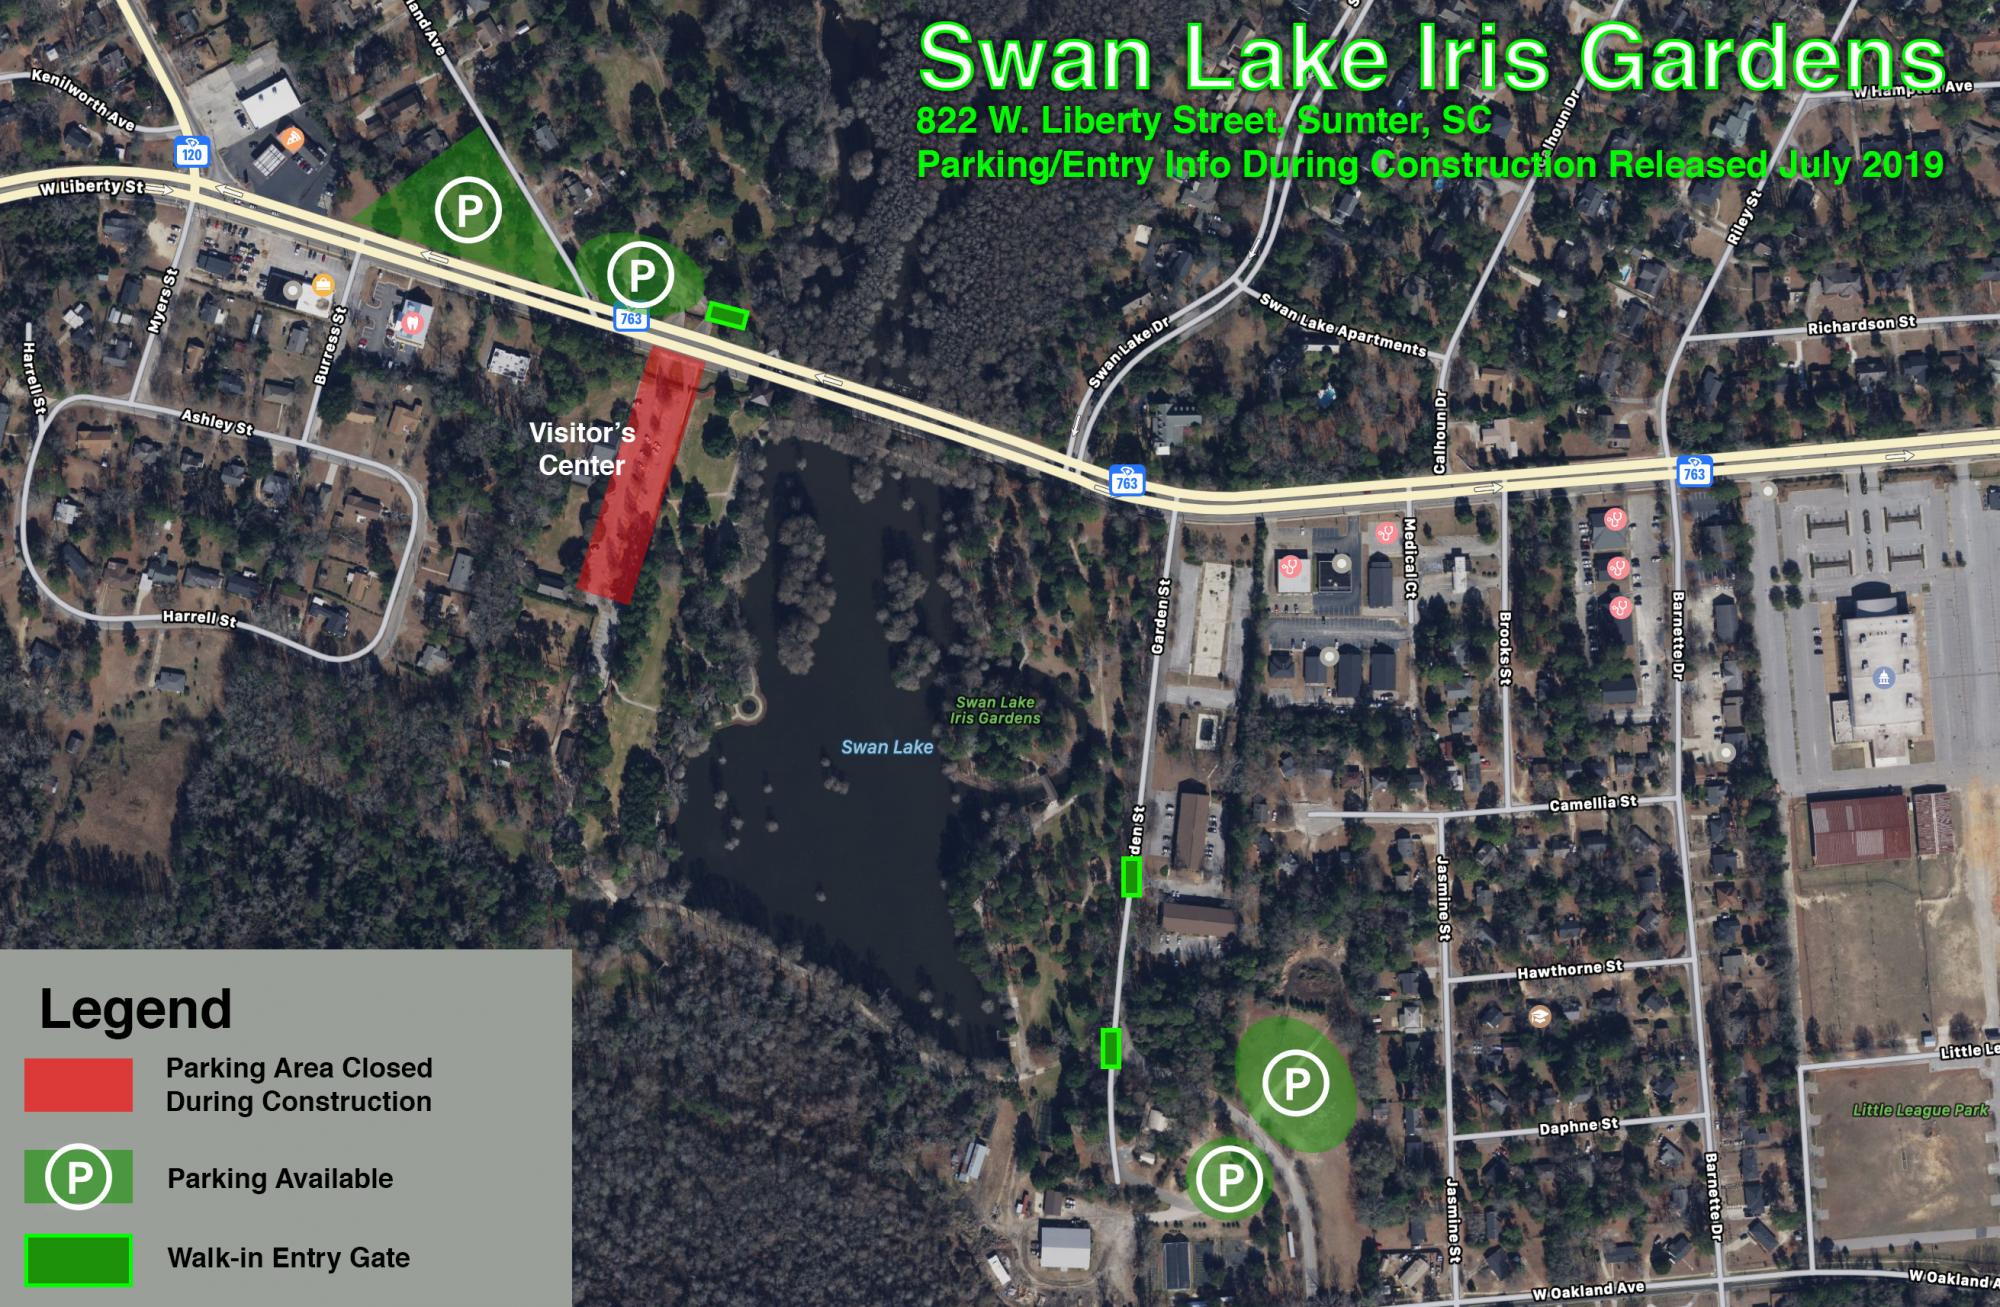 Parking map during construction at Swan Lake